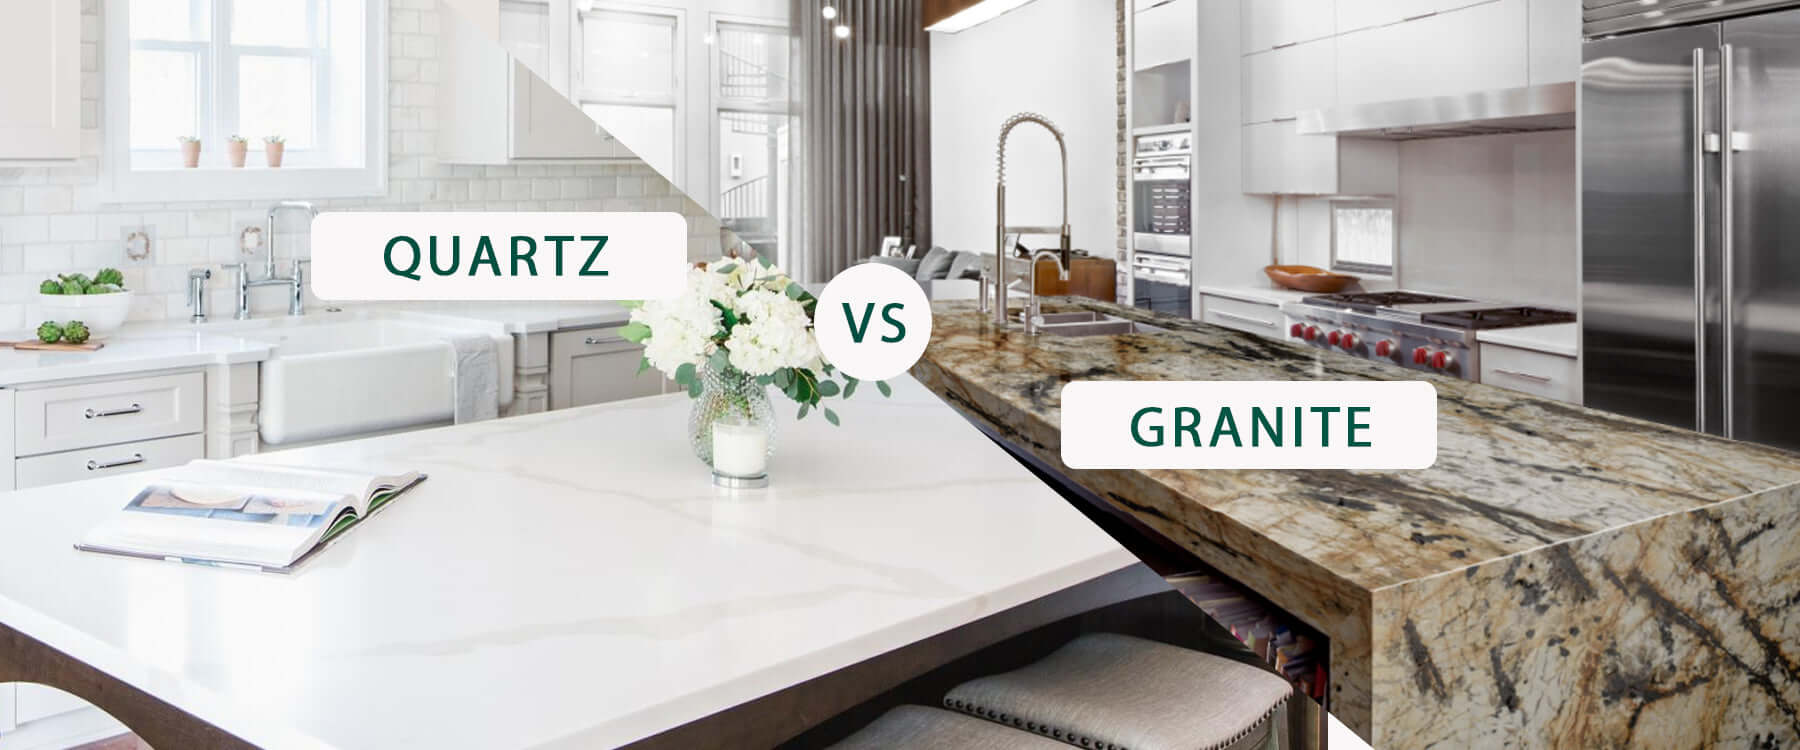 Which worktop is cost effective? Granite or Quartz